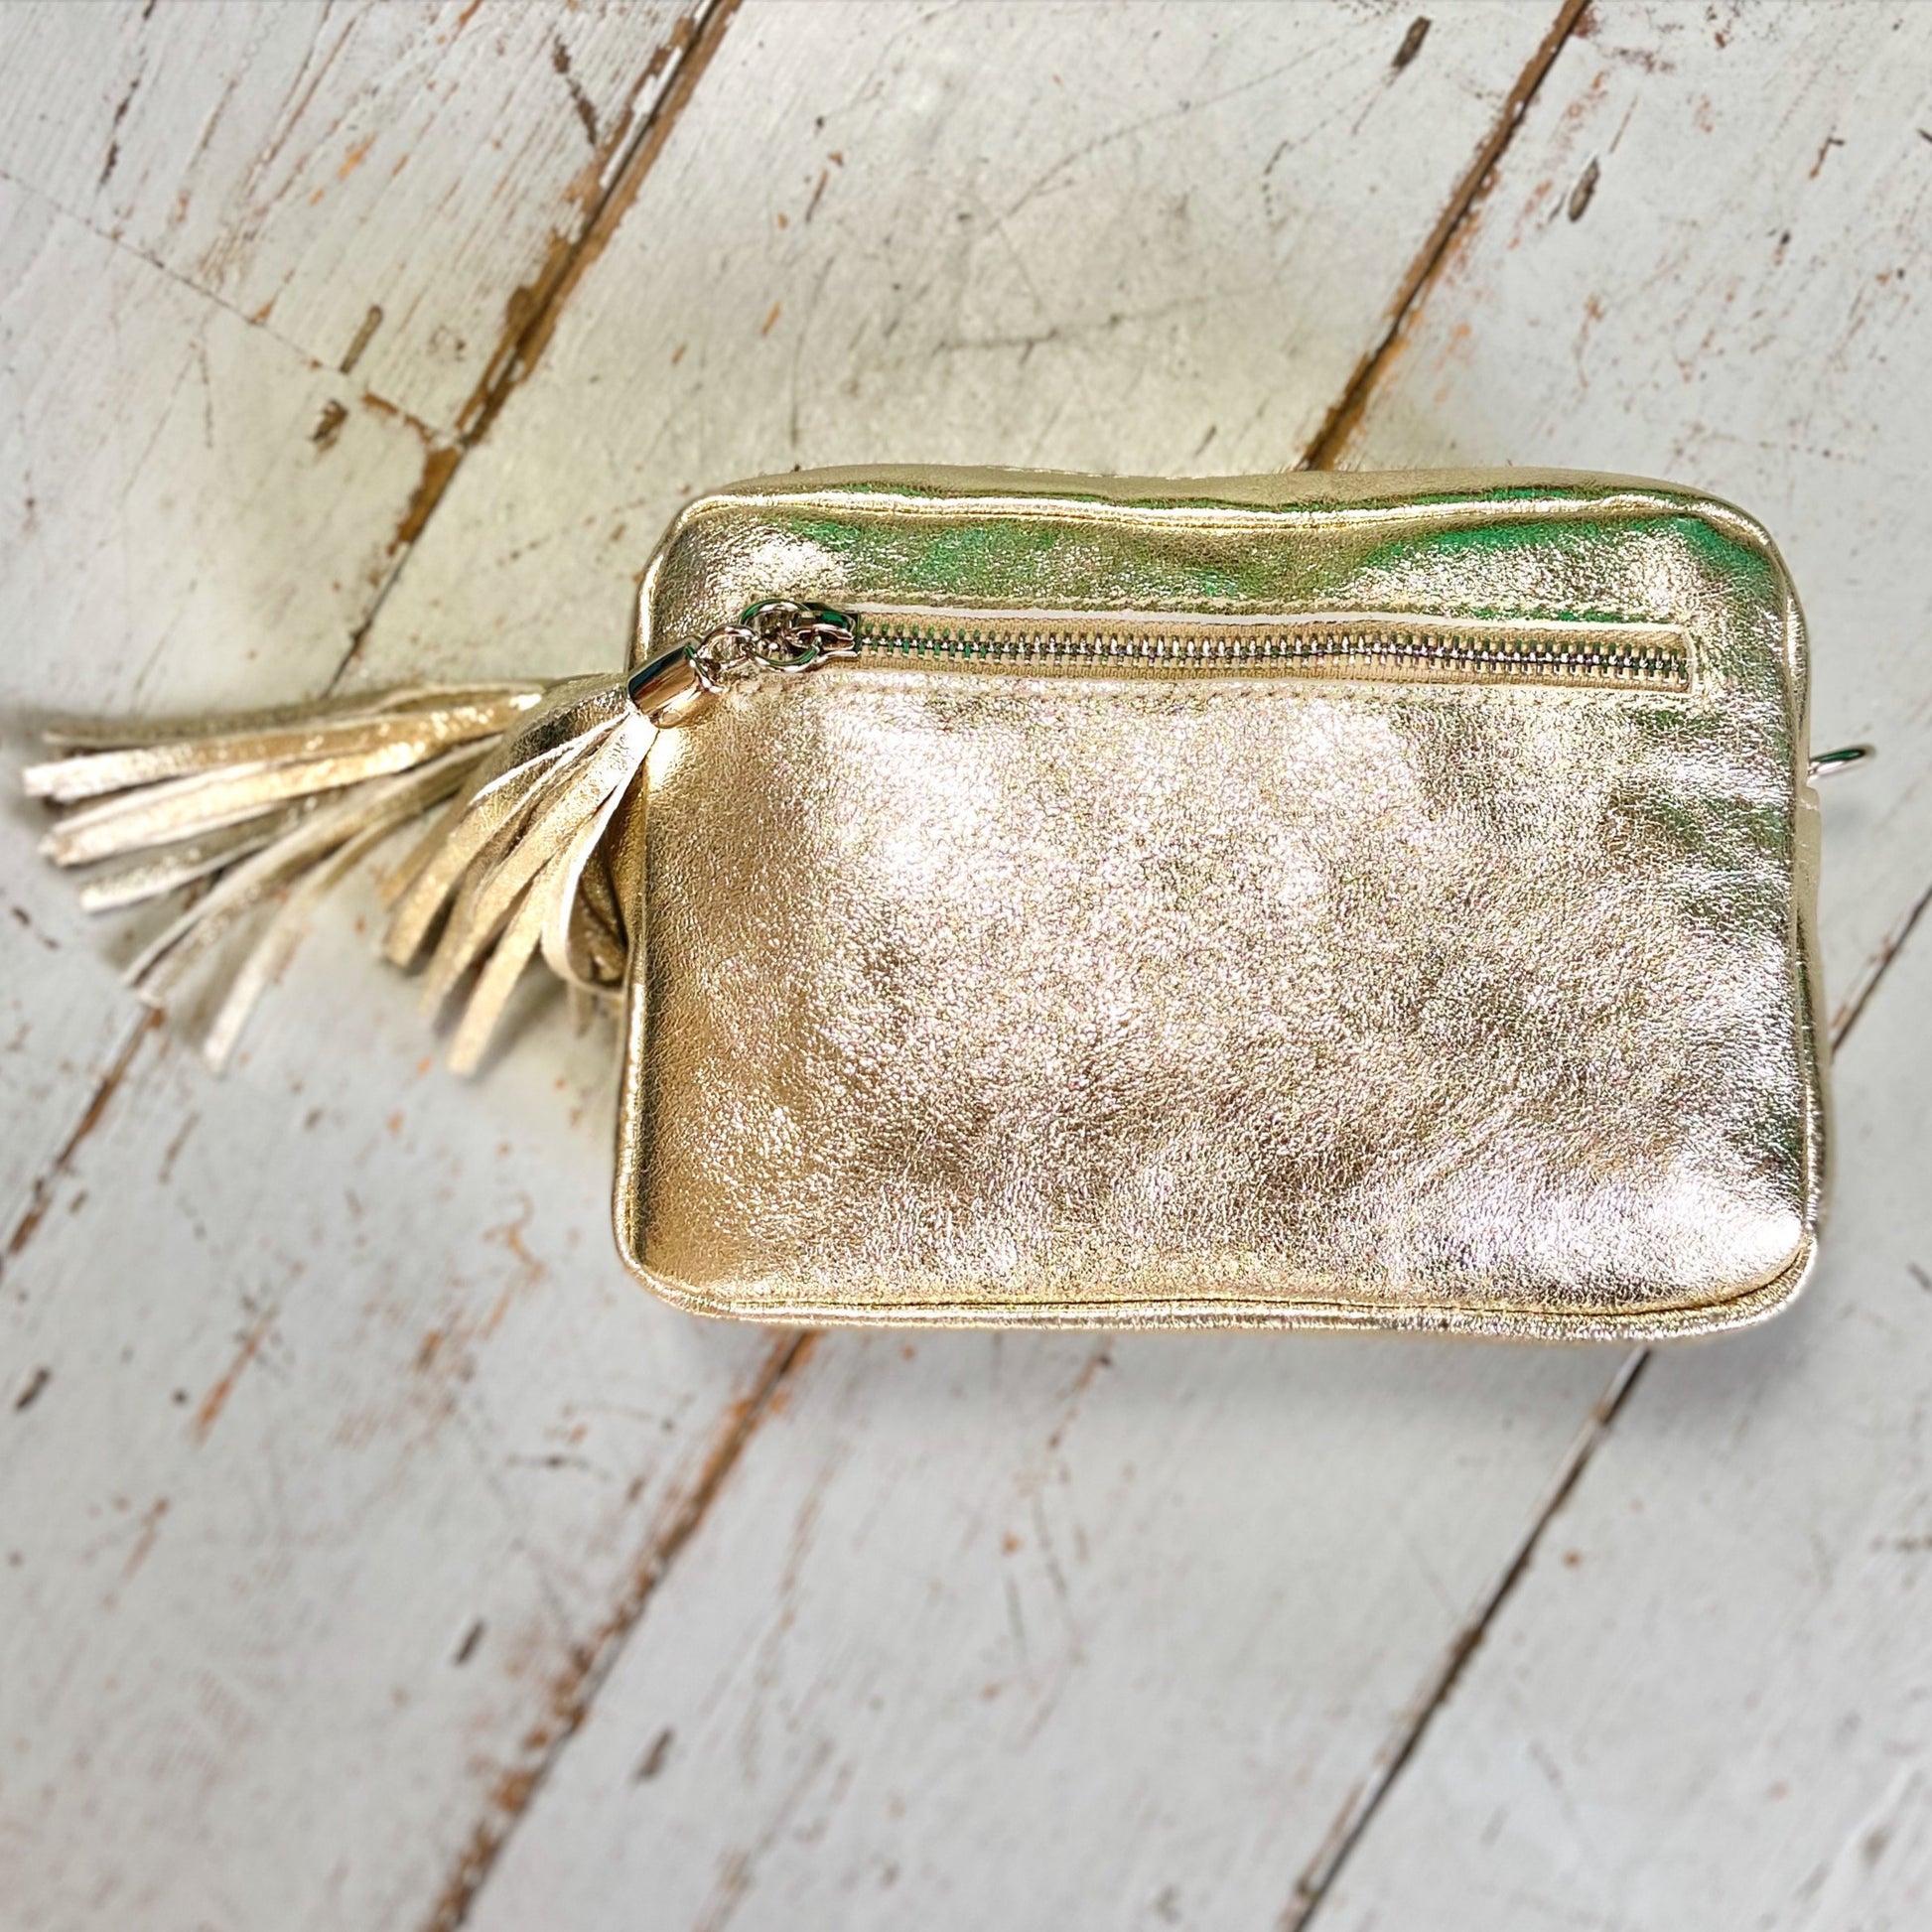 Leather camera bag. metallic gold, silver & rose gold handbag. Glitter & Mud